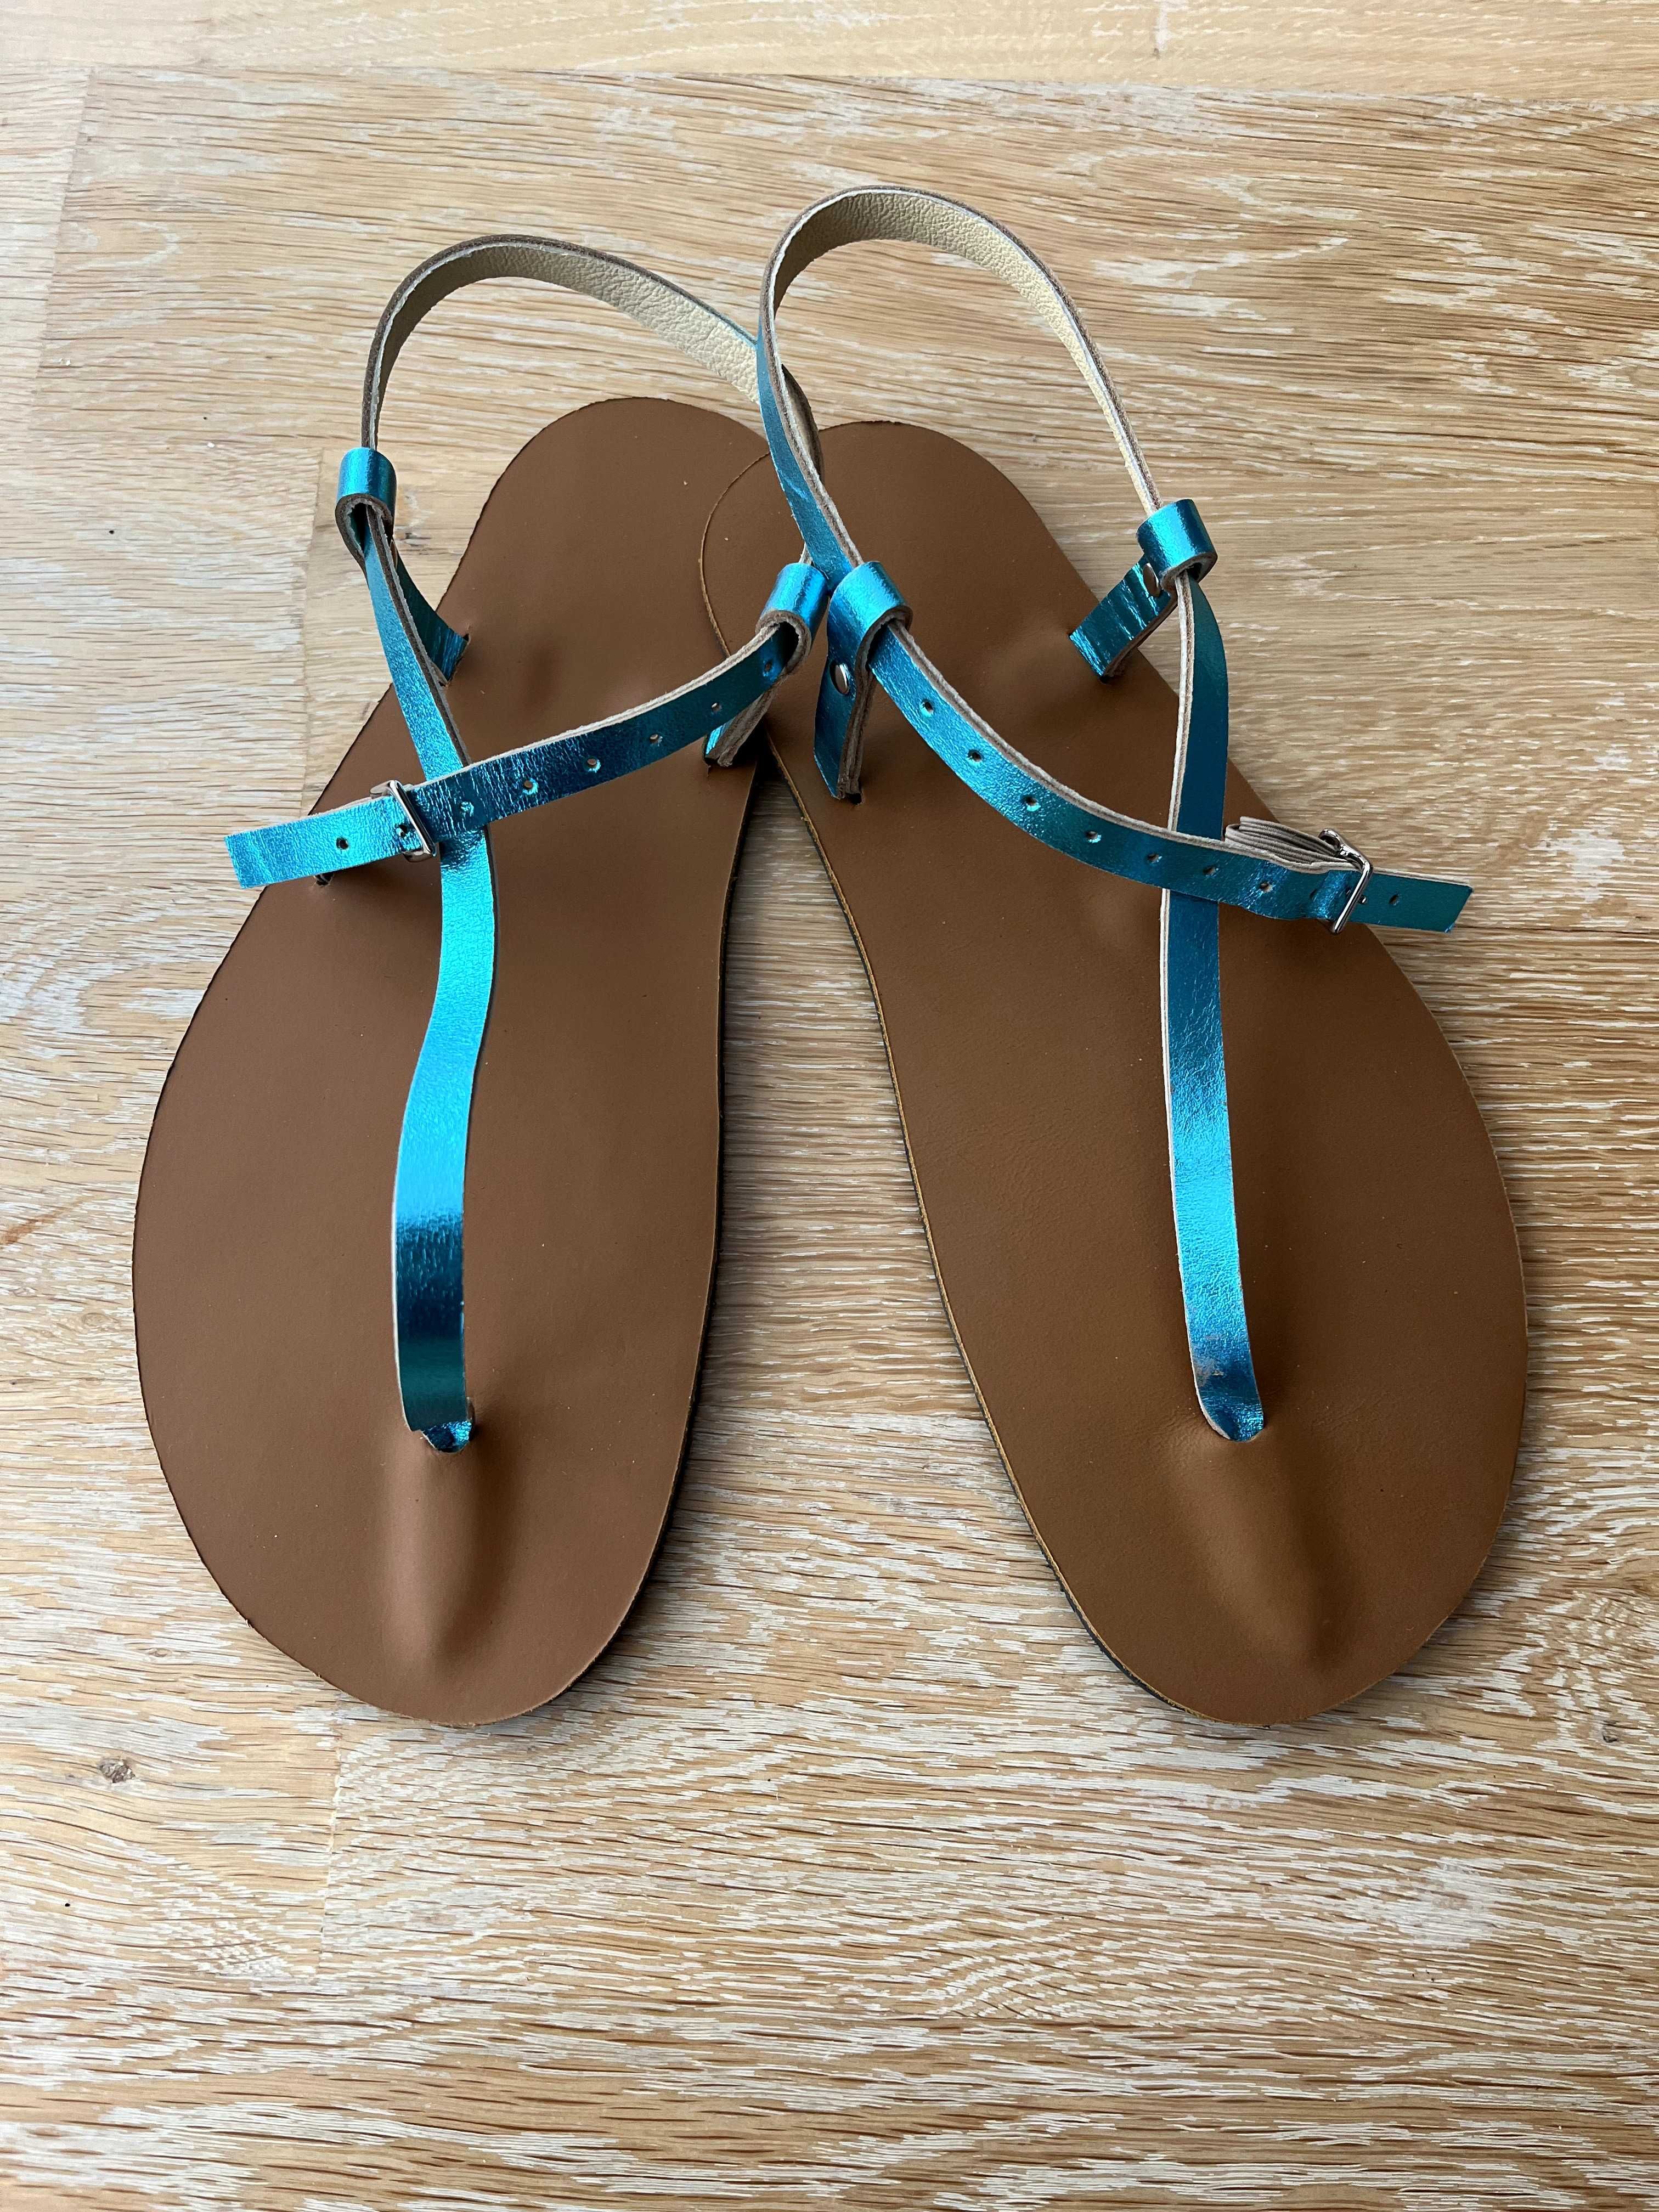 Боси сандали Unshoes Saffron Turquoise, #38, нови, цена 180лв